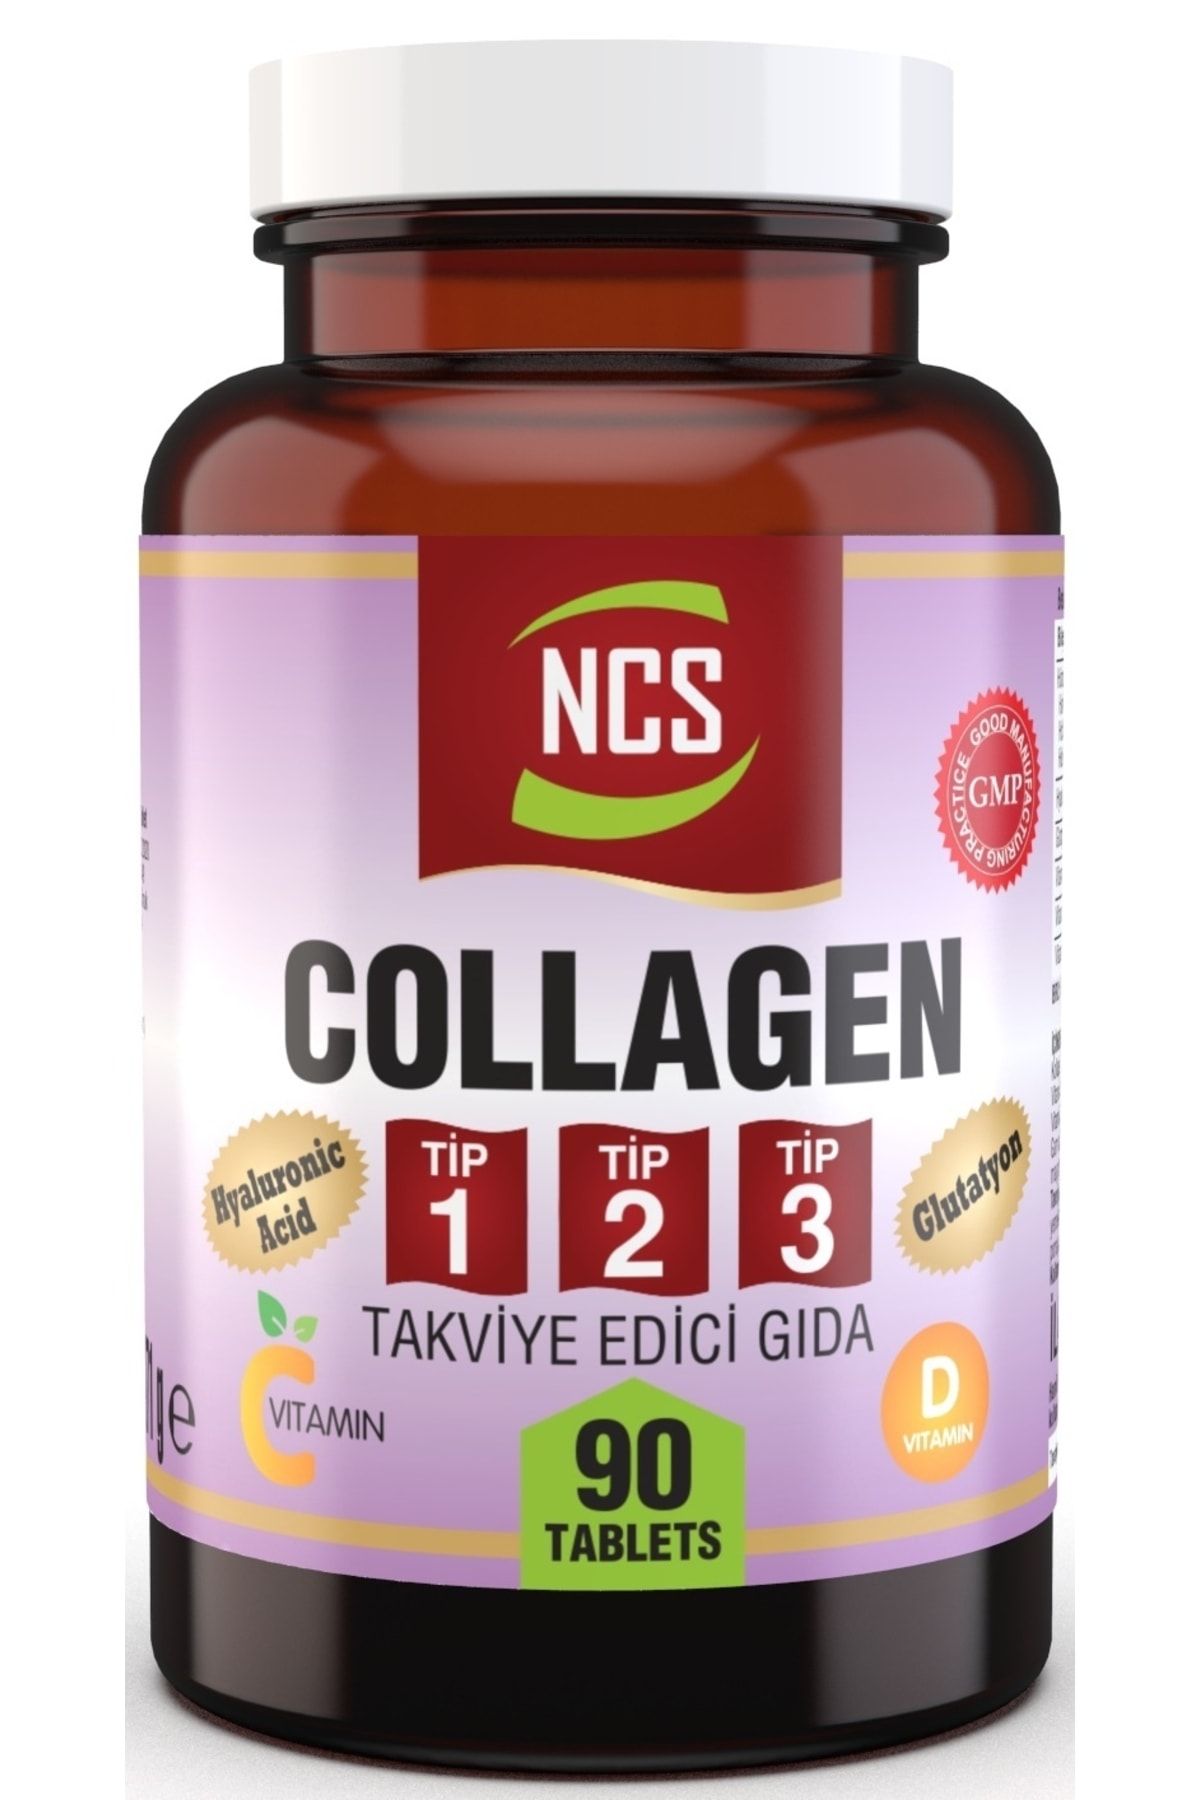 Ncs 90 Tablet Hidrolize Collagen (kolajen) Type (tip) 1-2-3 Hyaluronic Acid Vitamin C Glutatyon